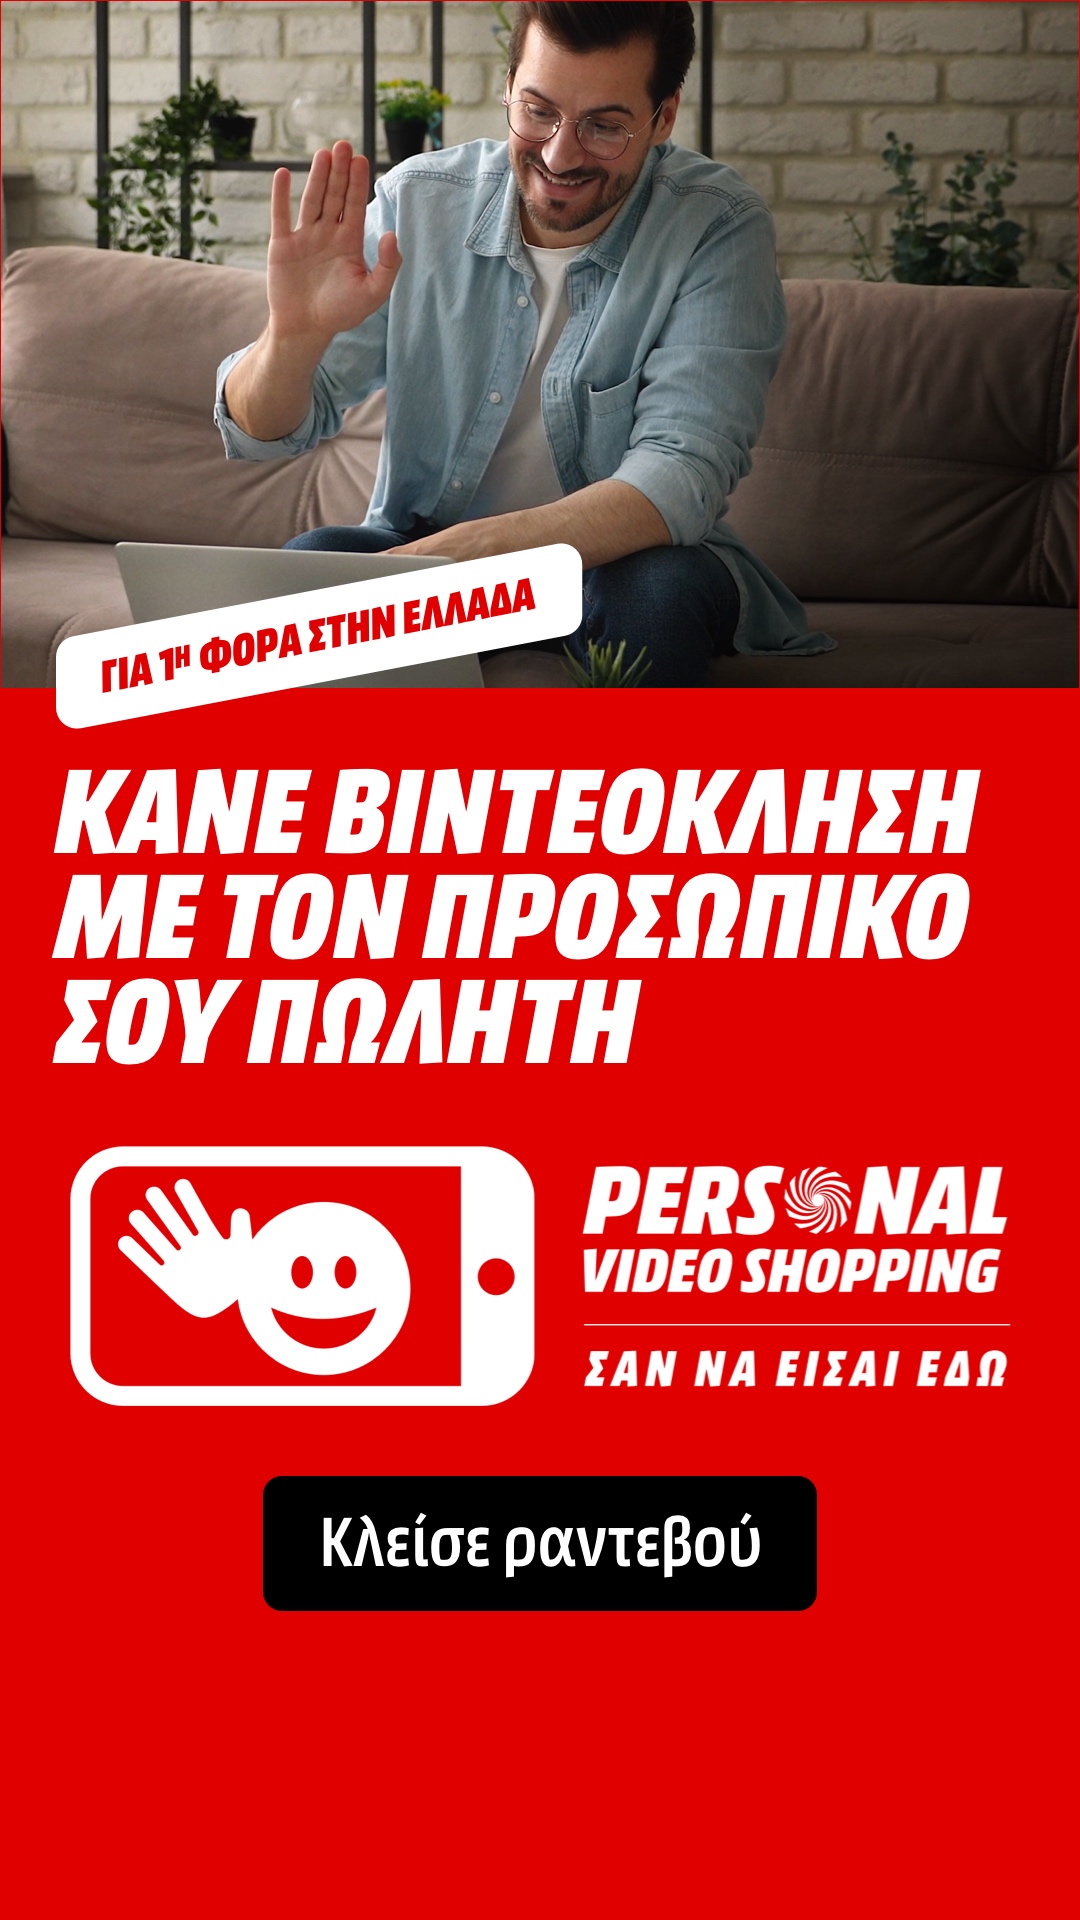 Personal_Video_Shopping_1.jpg